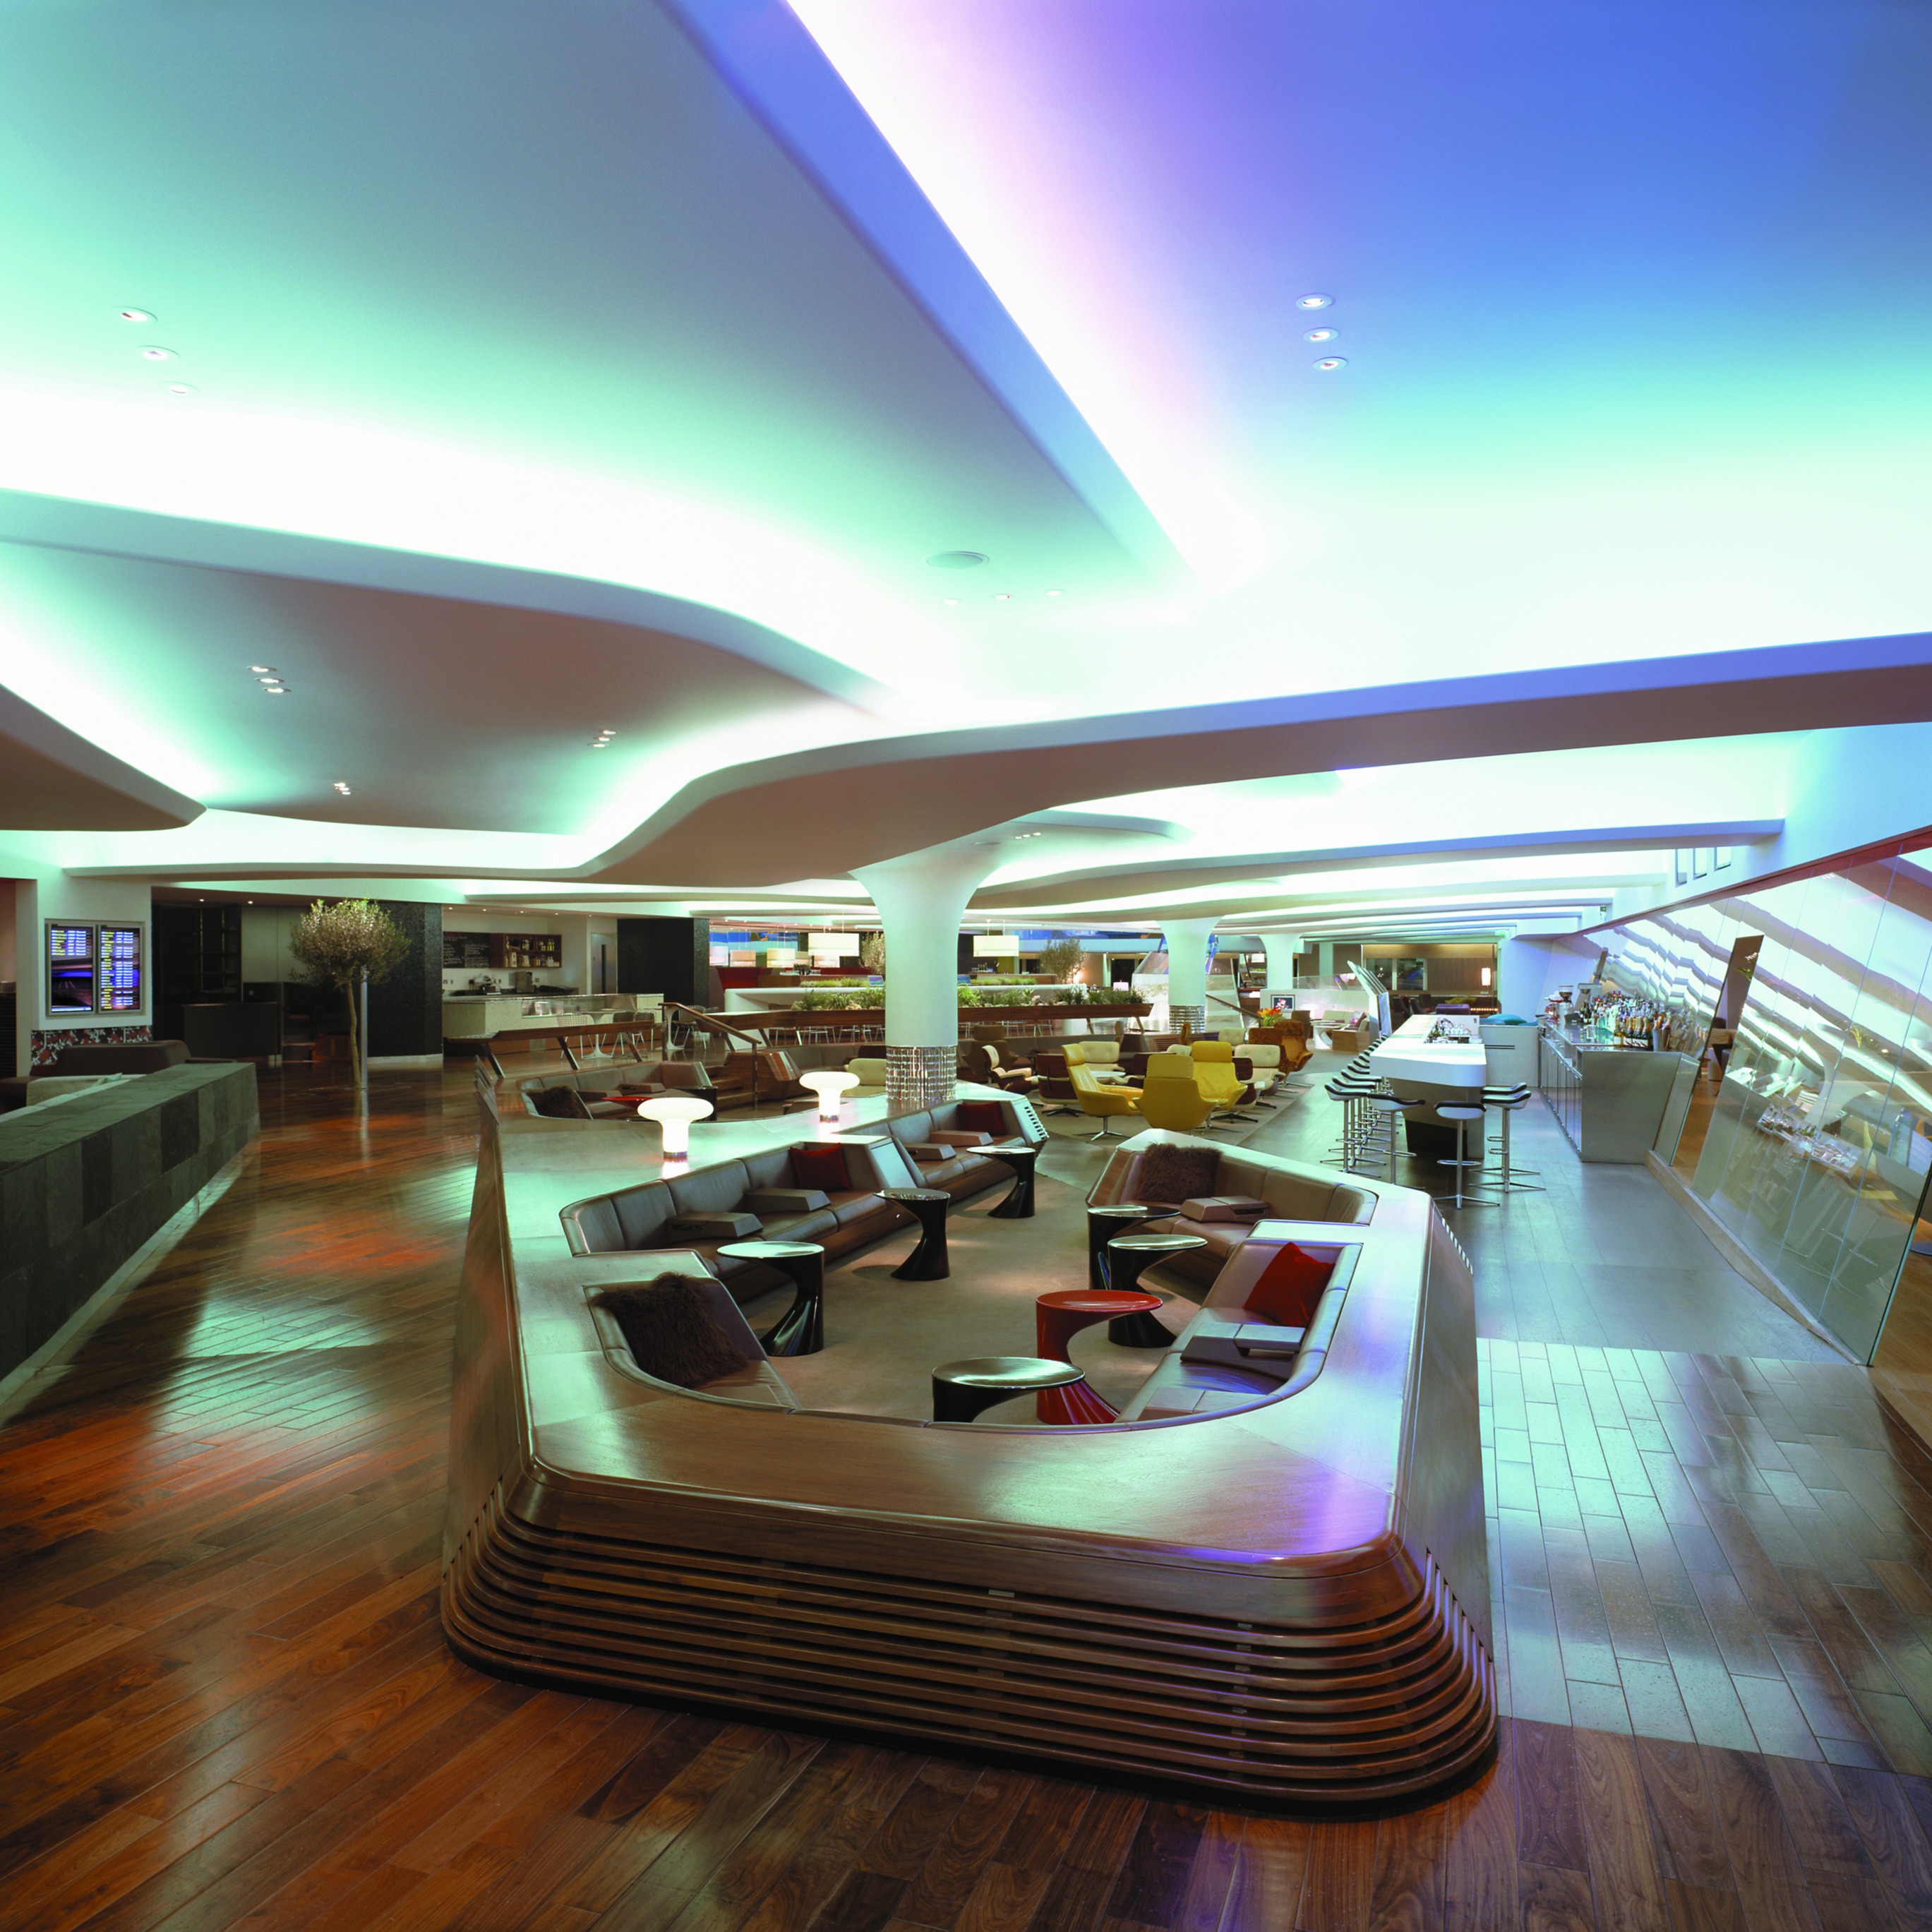 An image of Virgin Atlantic's first class lounge 